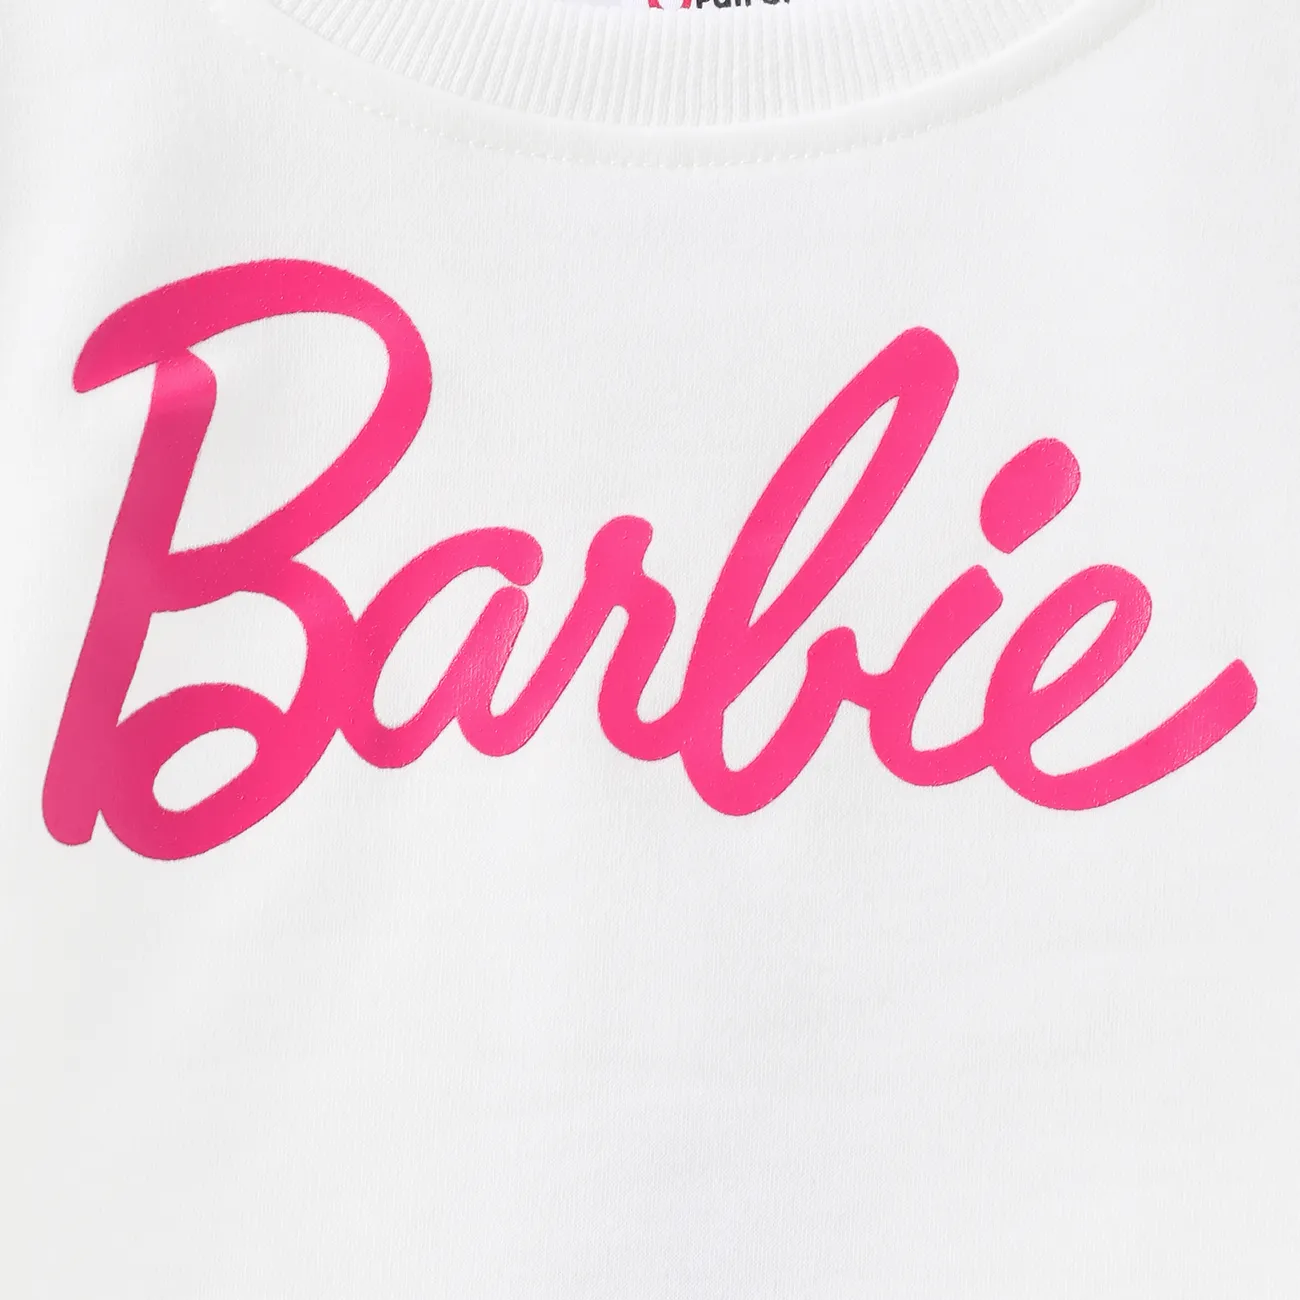 Barbie Niño pequeño Chica Trenza Infantil Traje de falda Blanco big image 1